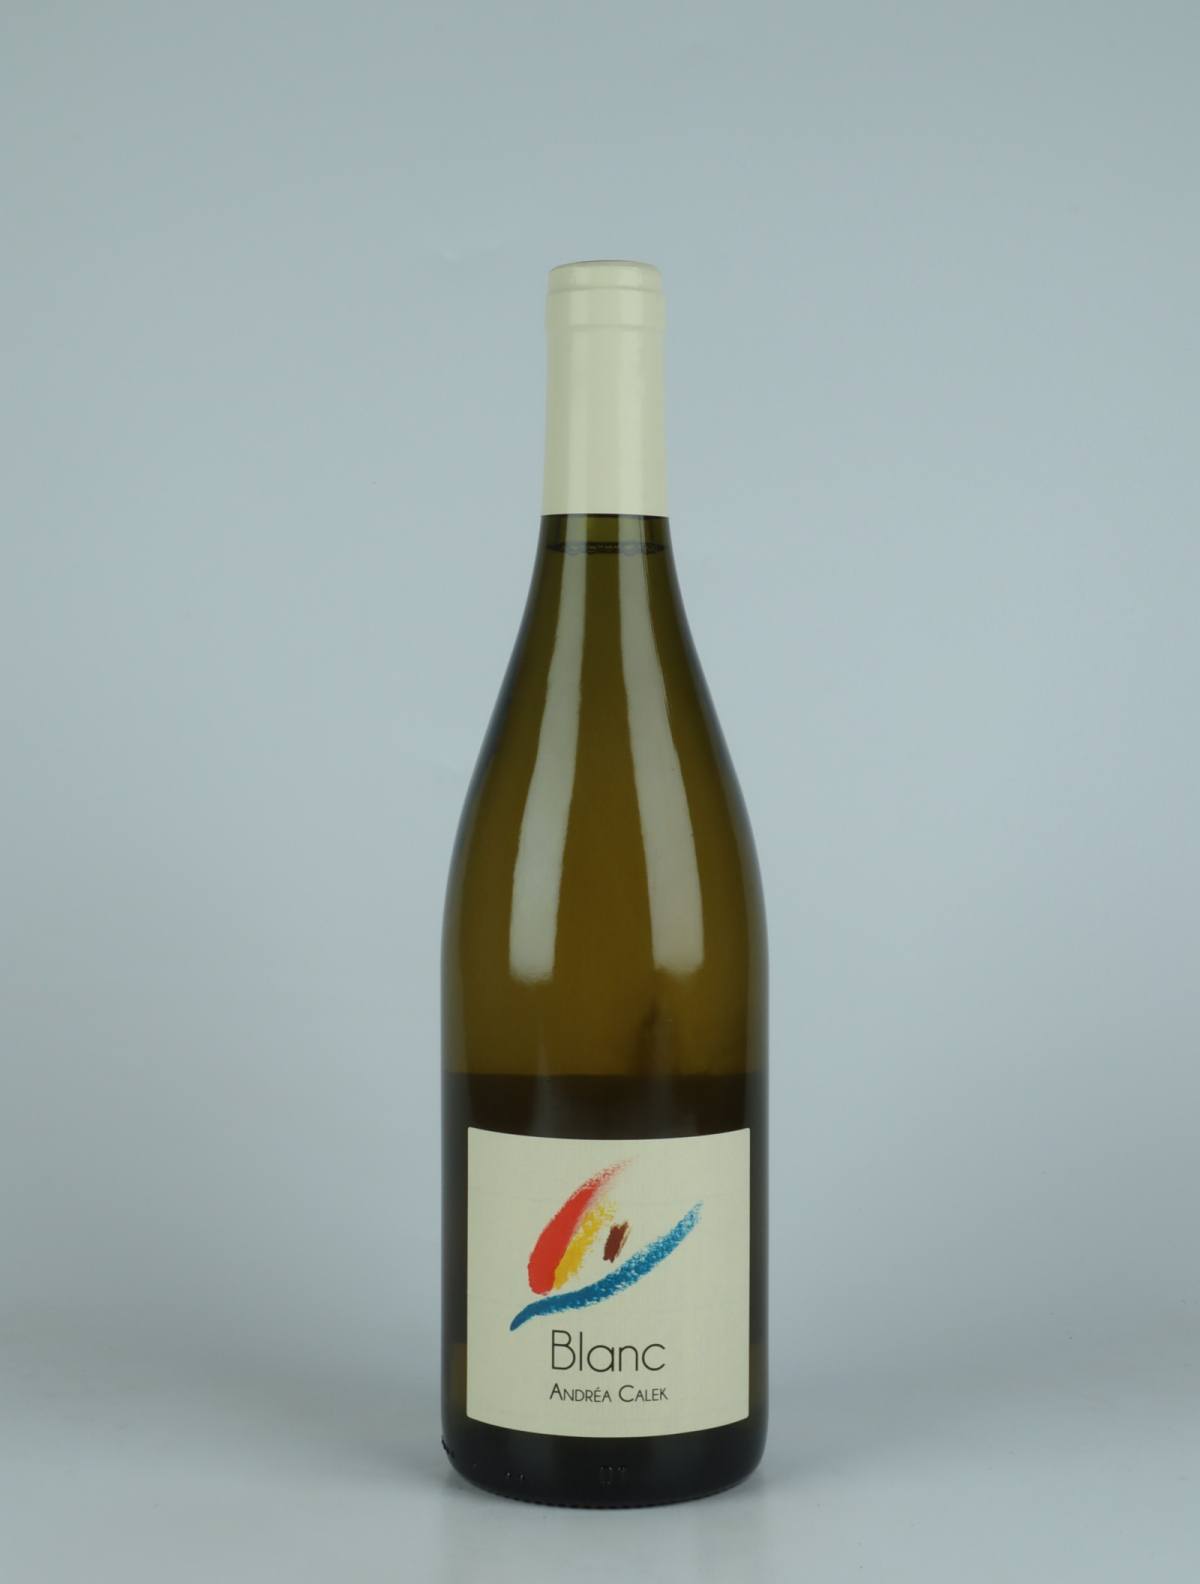 A bottle 2022 Blanc White wine from Andrea Calek, Ardèche in France